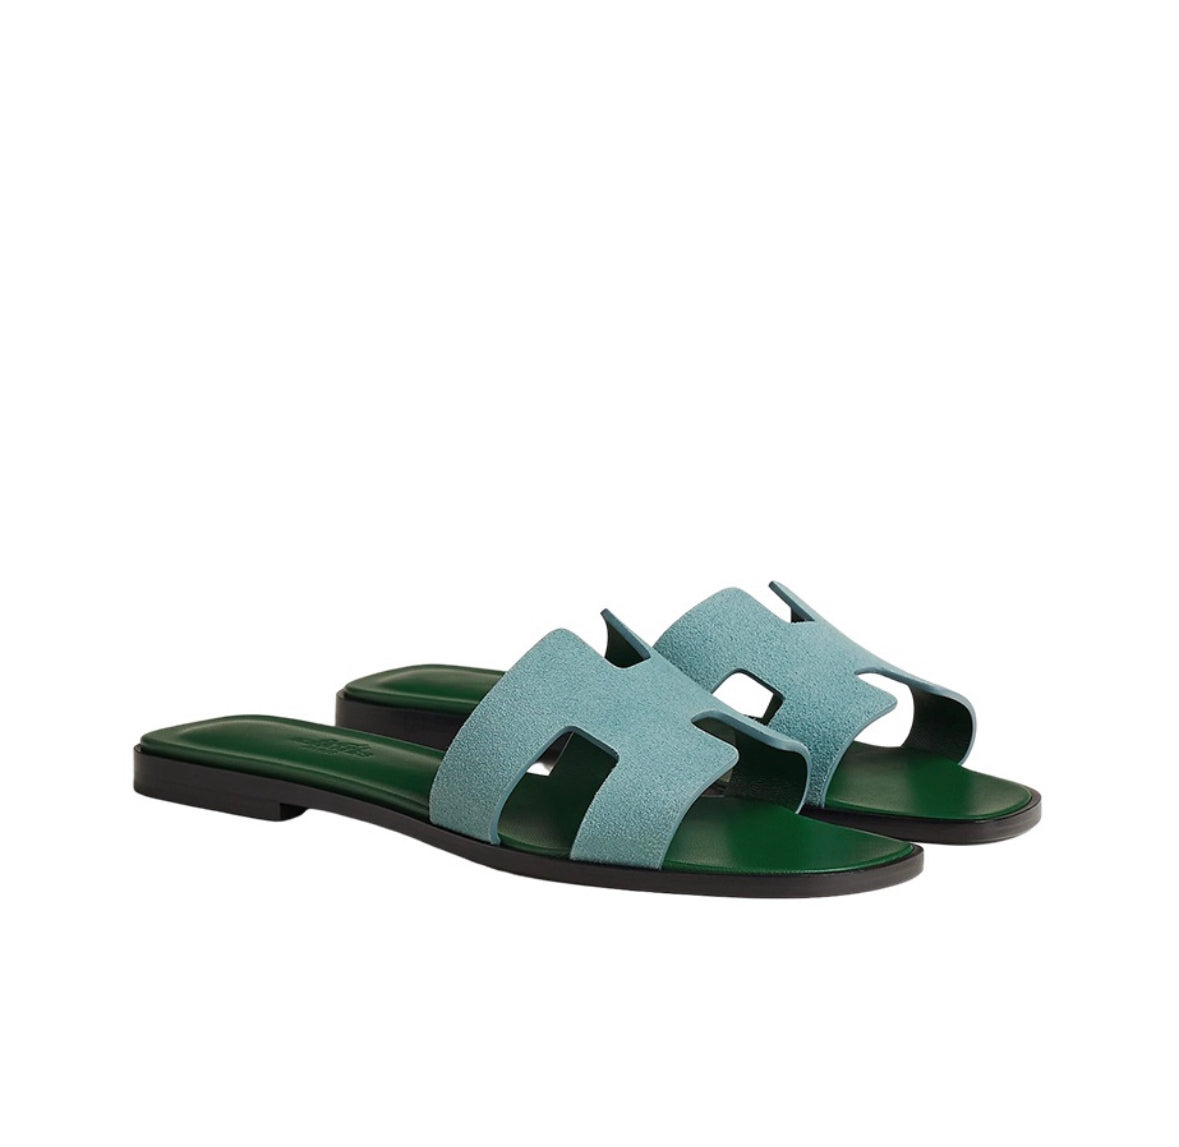 Hermes Oran Sandals “Olive/Turquoise”